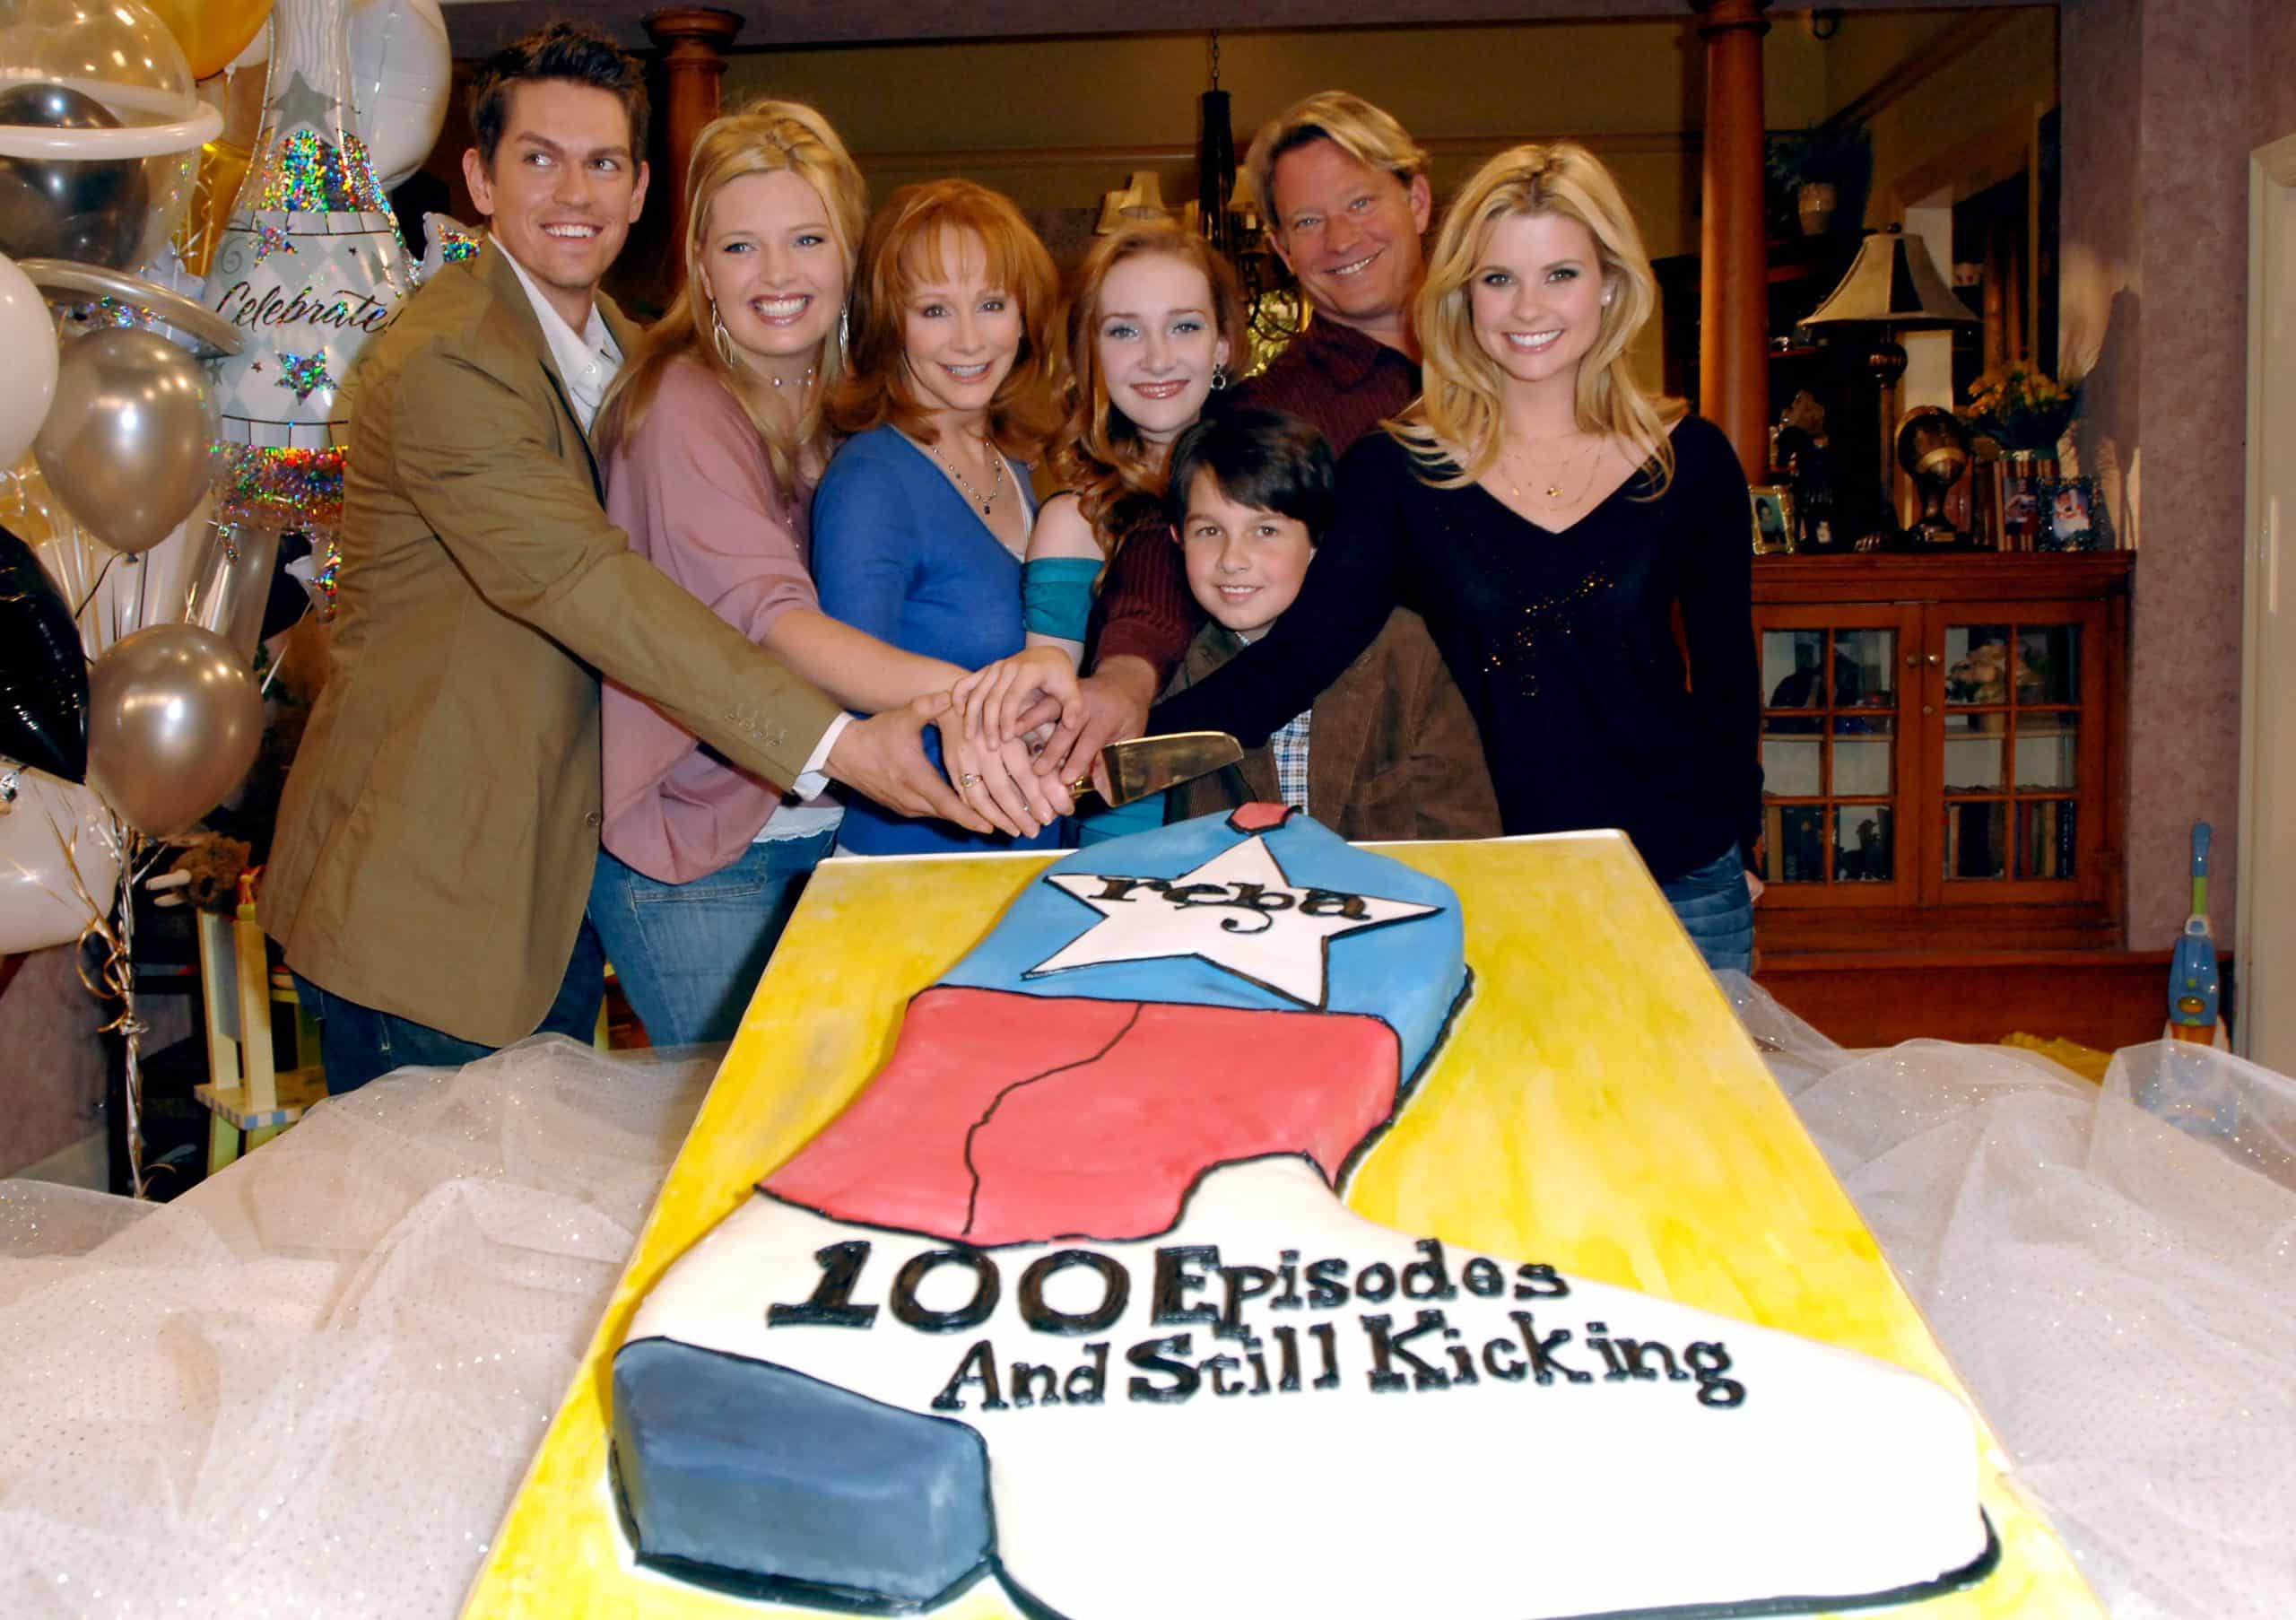 Reba McEntire & the "Reba" cast celebrate their 100th episode